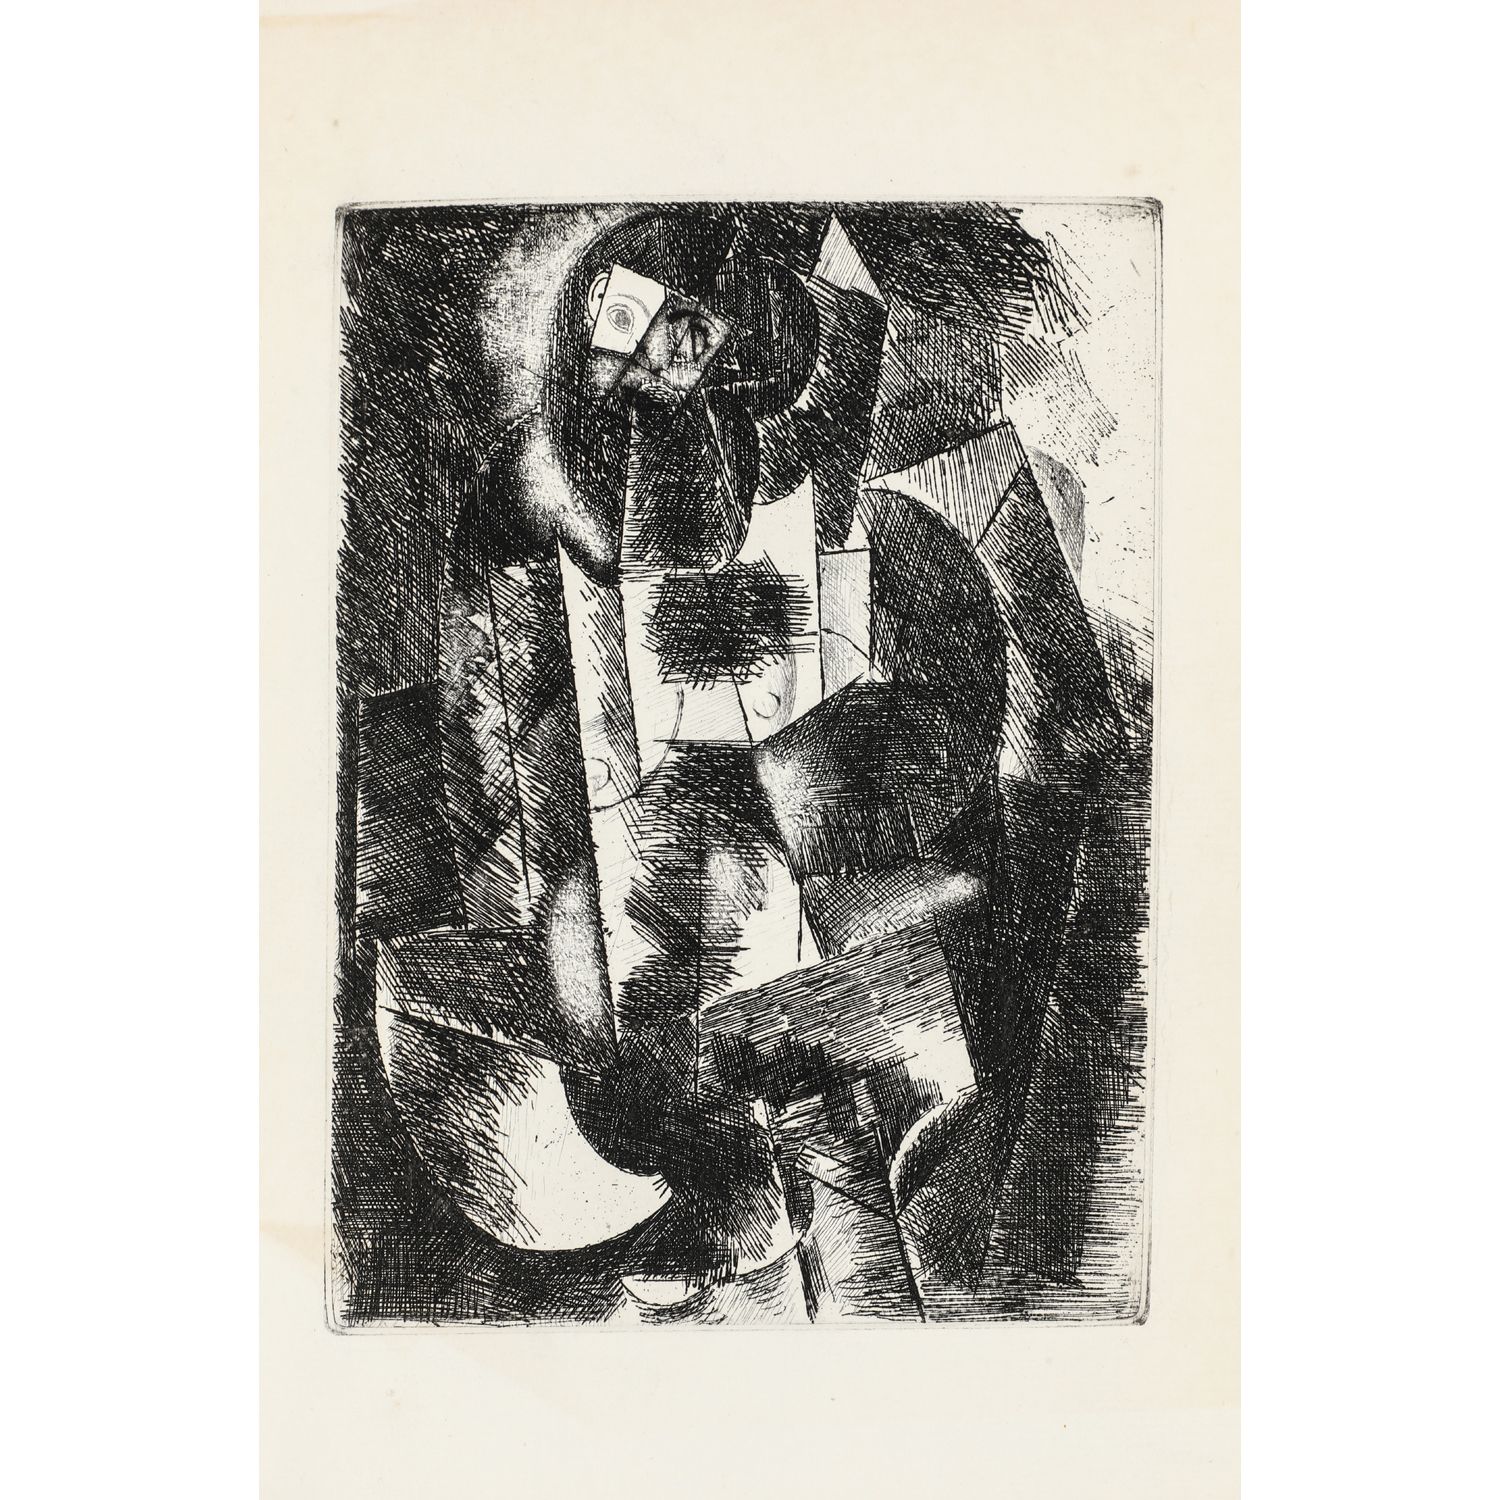 Pablo Picasso (1881-1973) Max Jacob (1876-1944) 巴勃罗-毕加索 (1881-1973)

马克斯-雅各布（187&hellip;